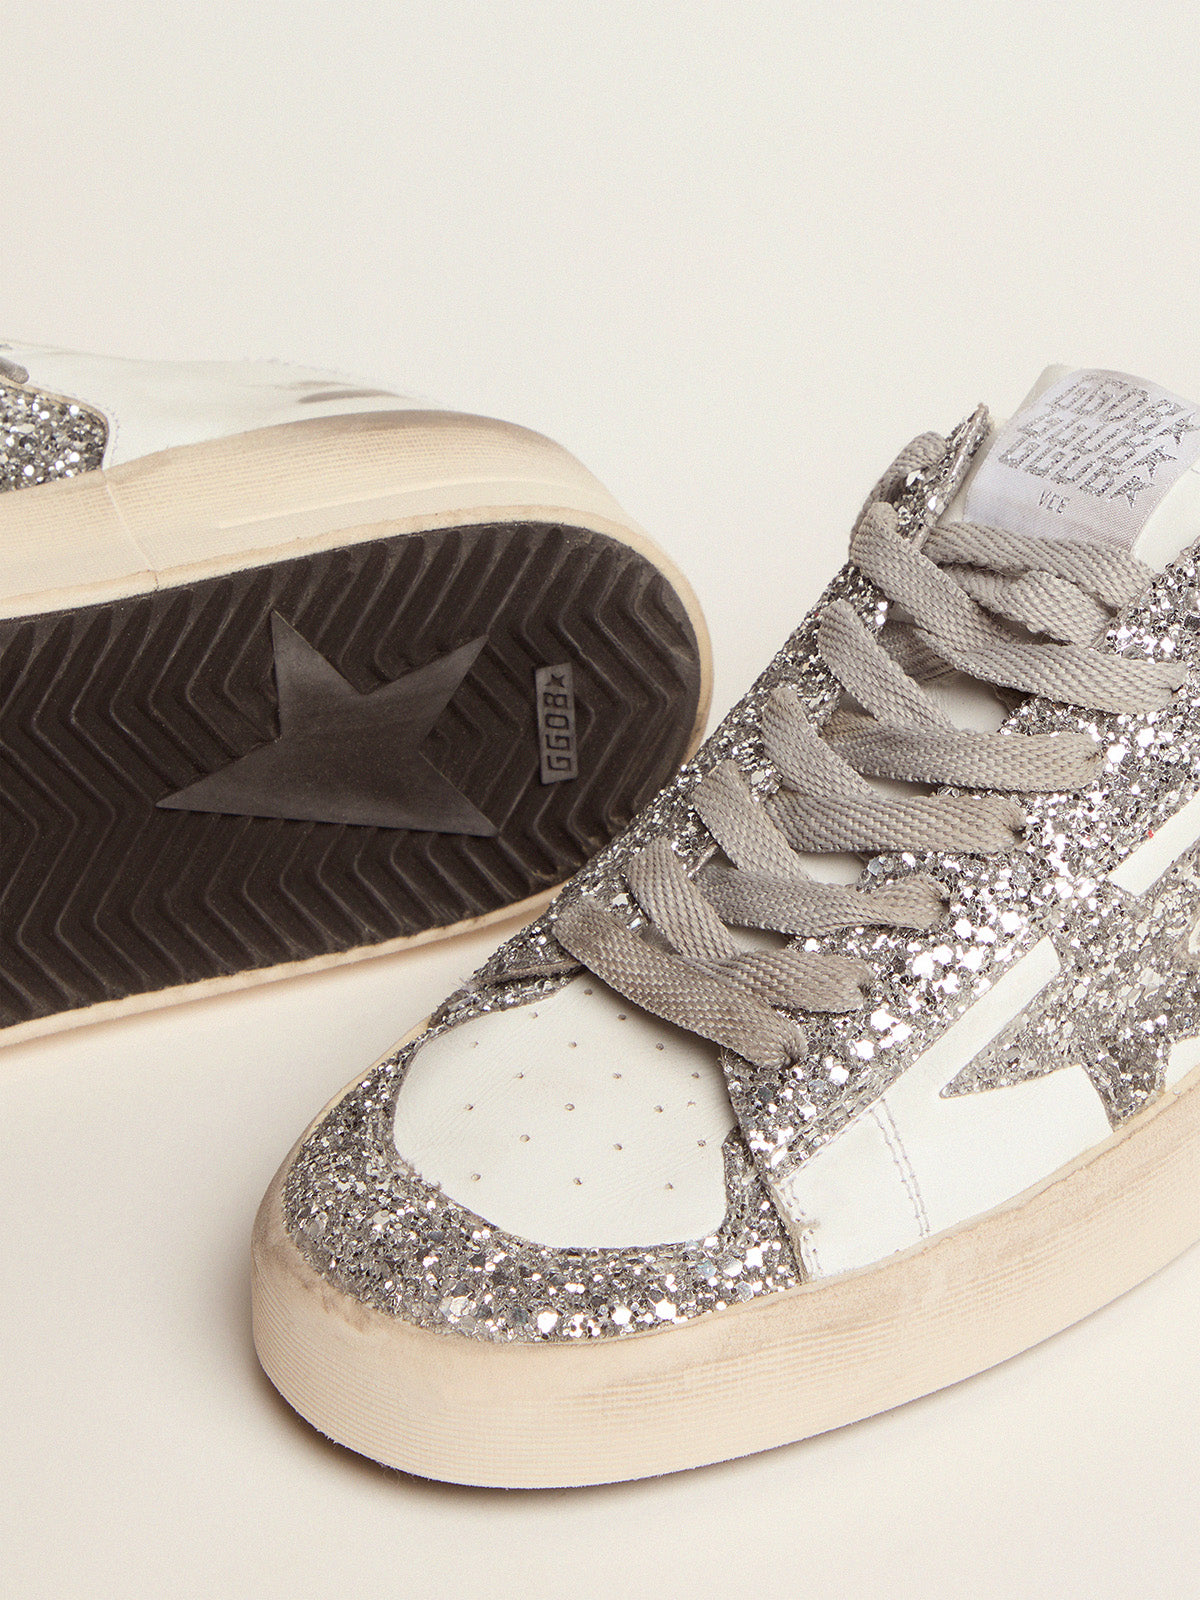 Stardan Sneakers, white leather & silver glitter